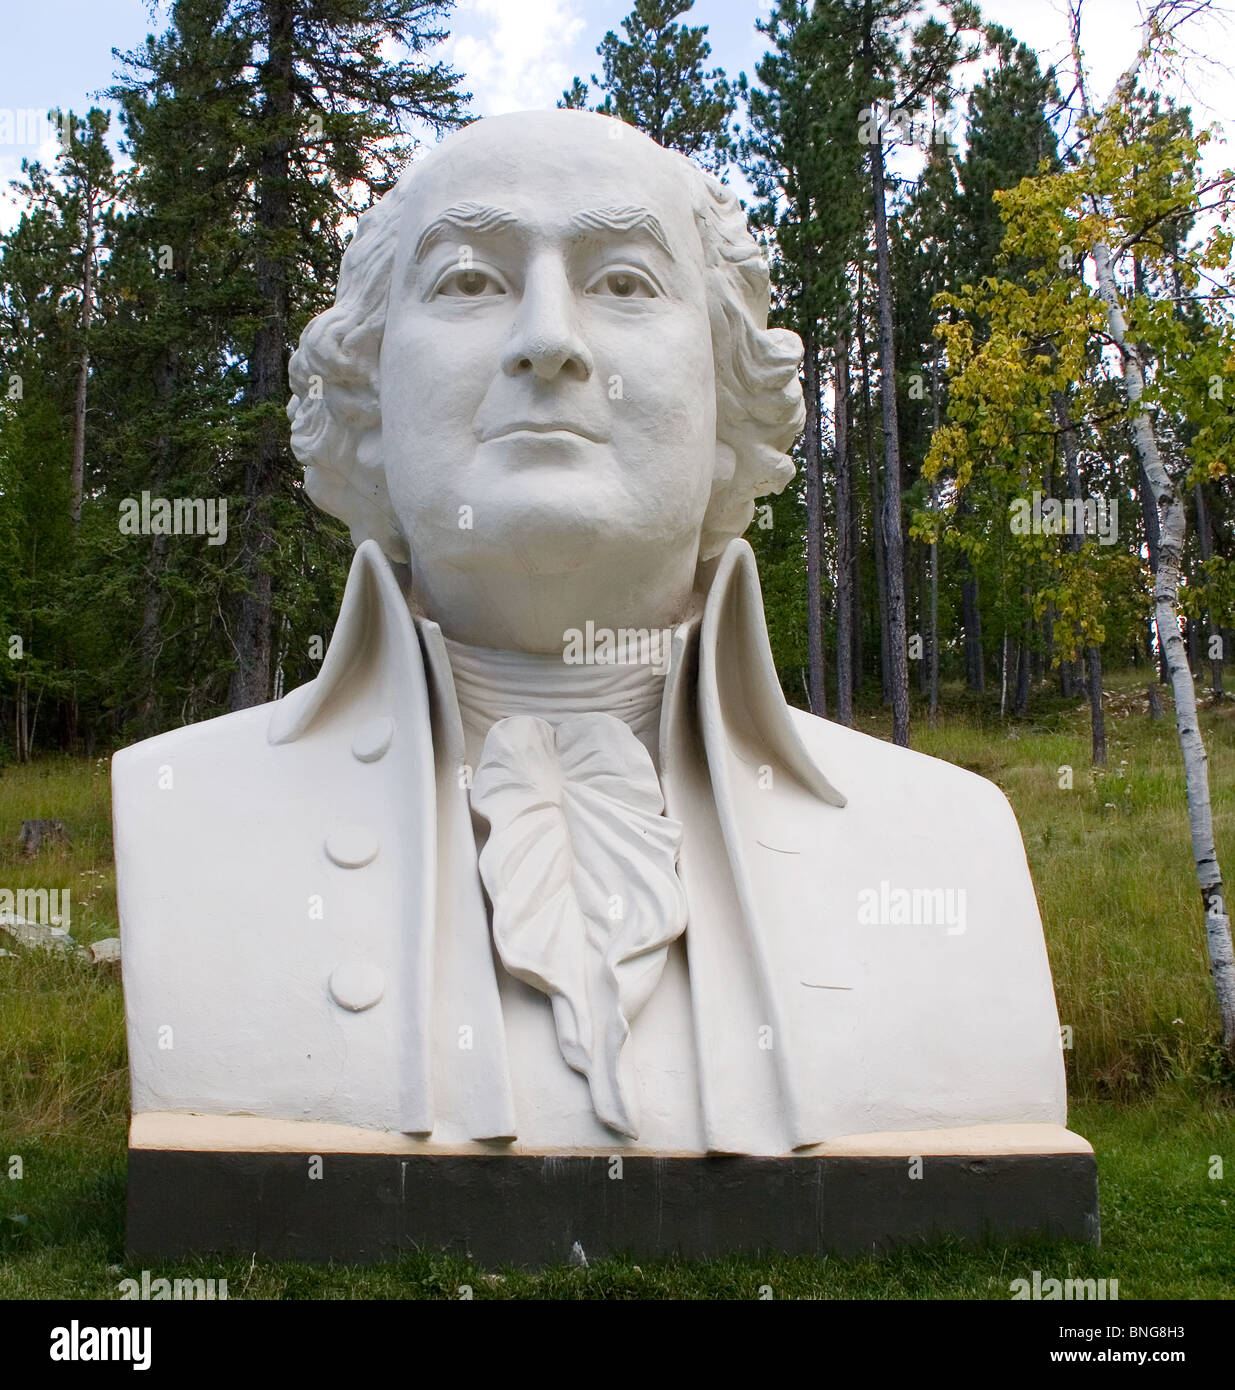 John Adams bust by sculptor David Adickes at Presidents Park in Lead South Dakota Stock Photo